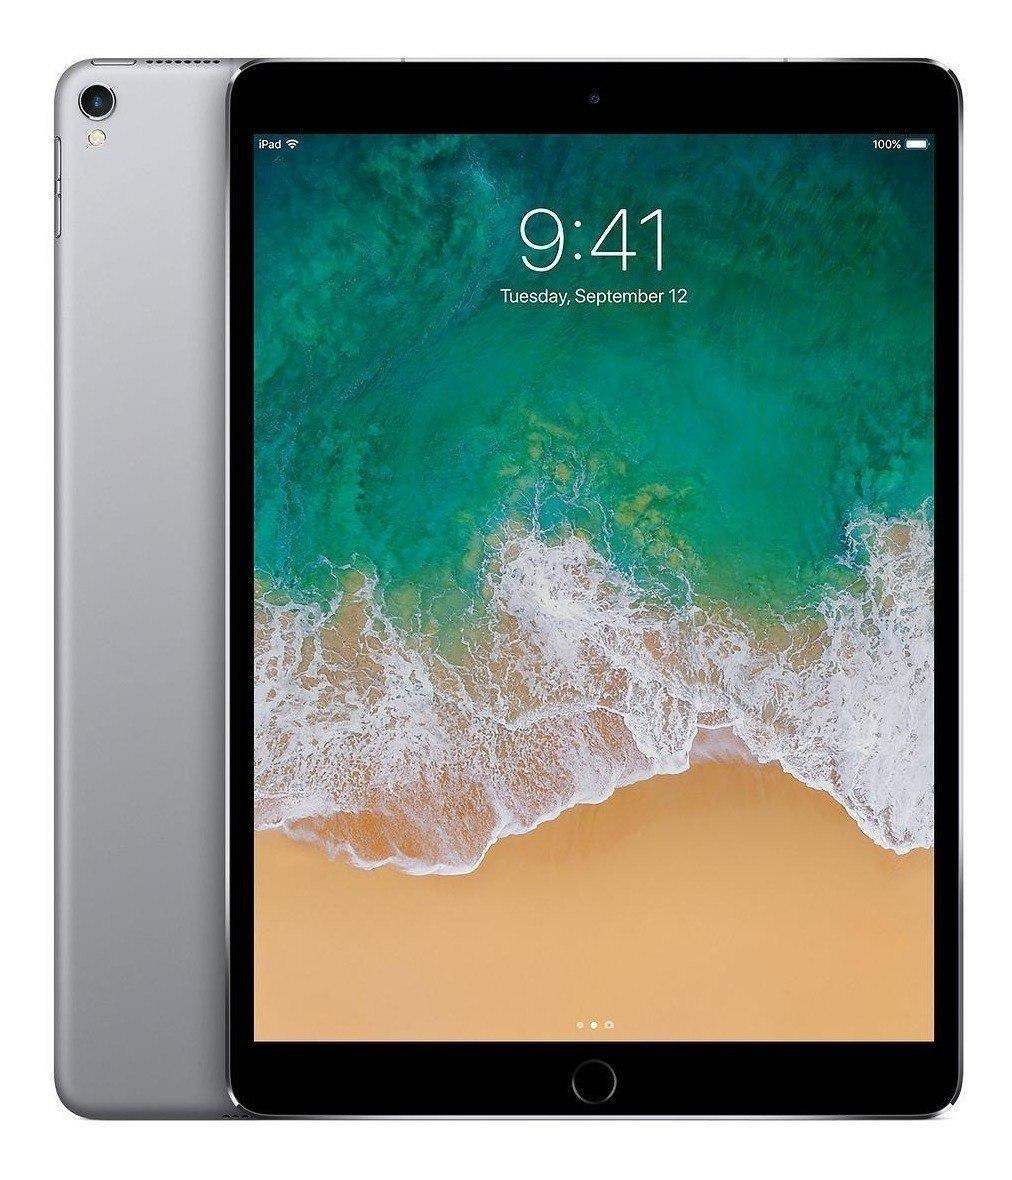 iPad Apple Pro 2nd generation 2017 A1701 10.5" 256GB space gray com 4GB